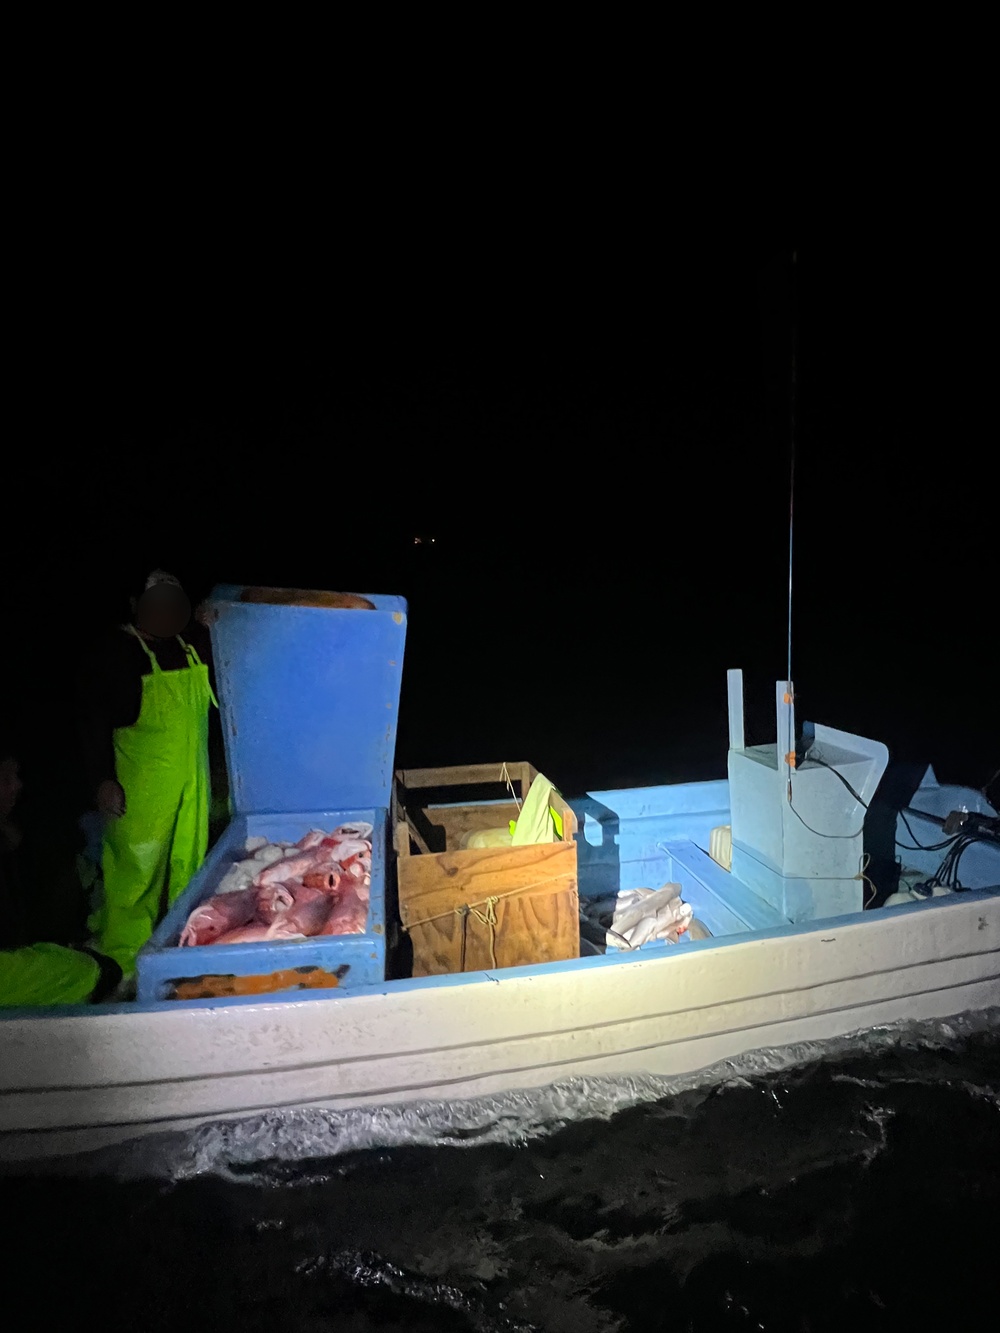 Coast Guard interdicts lancha illegally fishing off Texas Coast